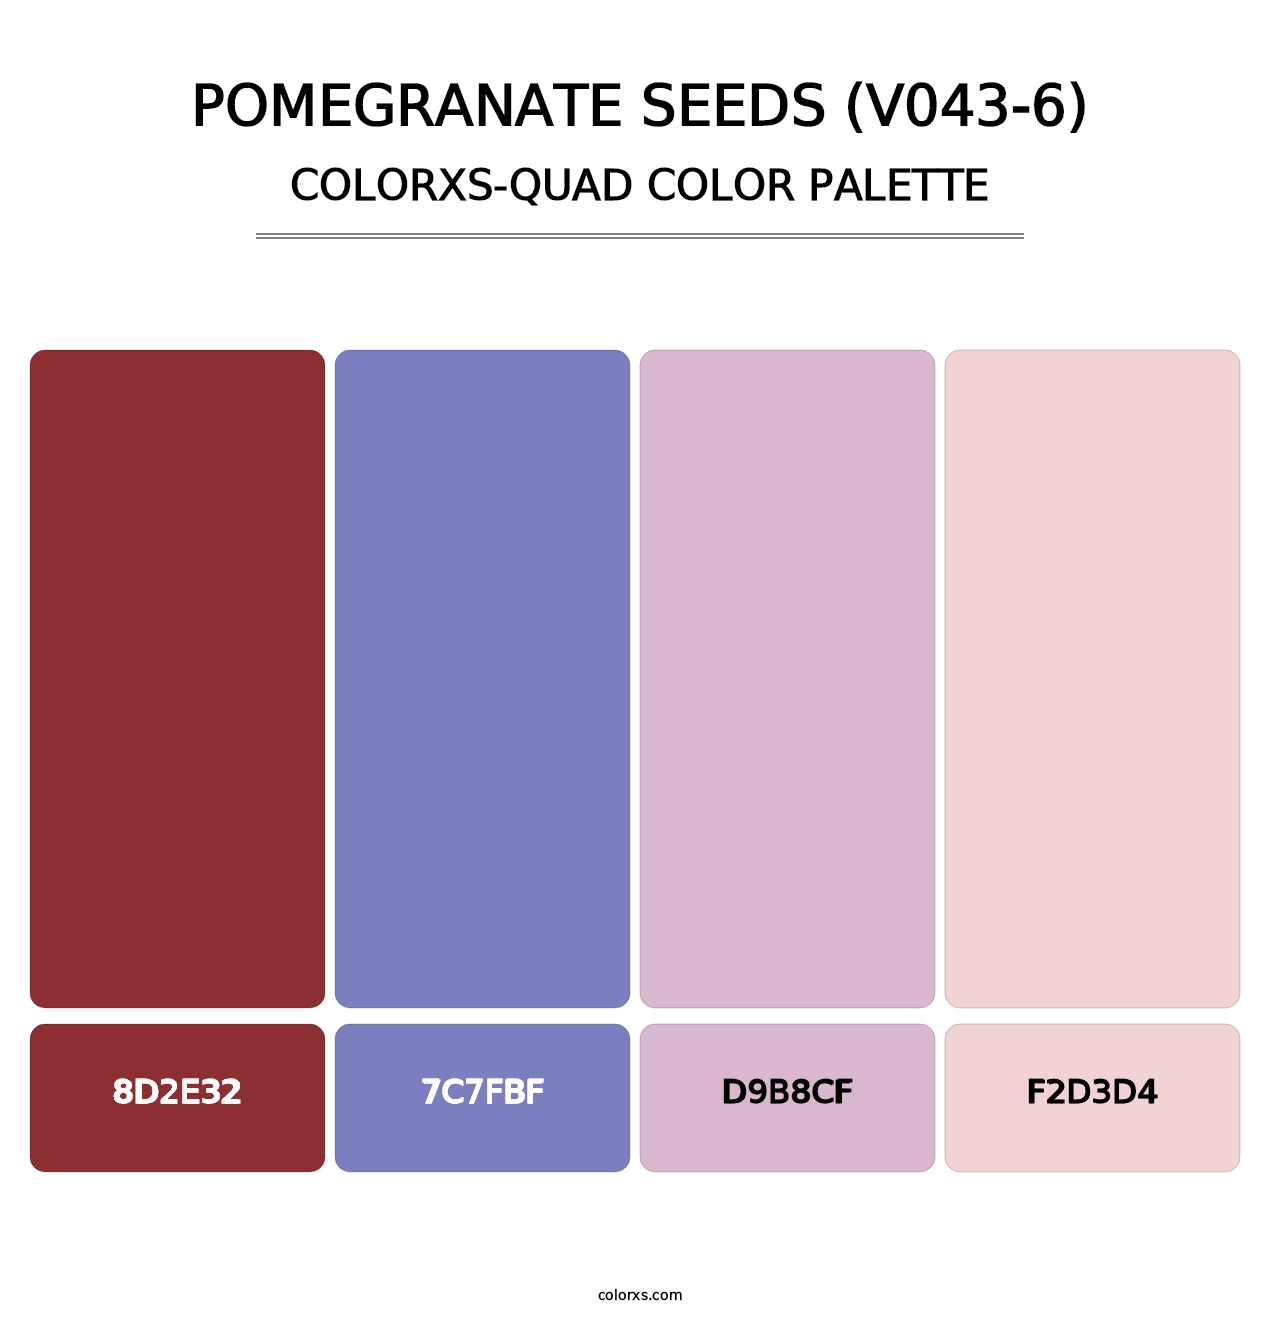 Pomegranate Seeds (V043-6) - Colorxs Quad Palette